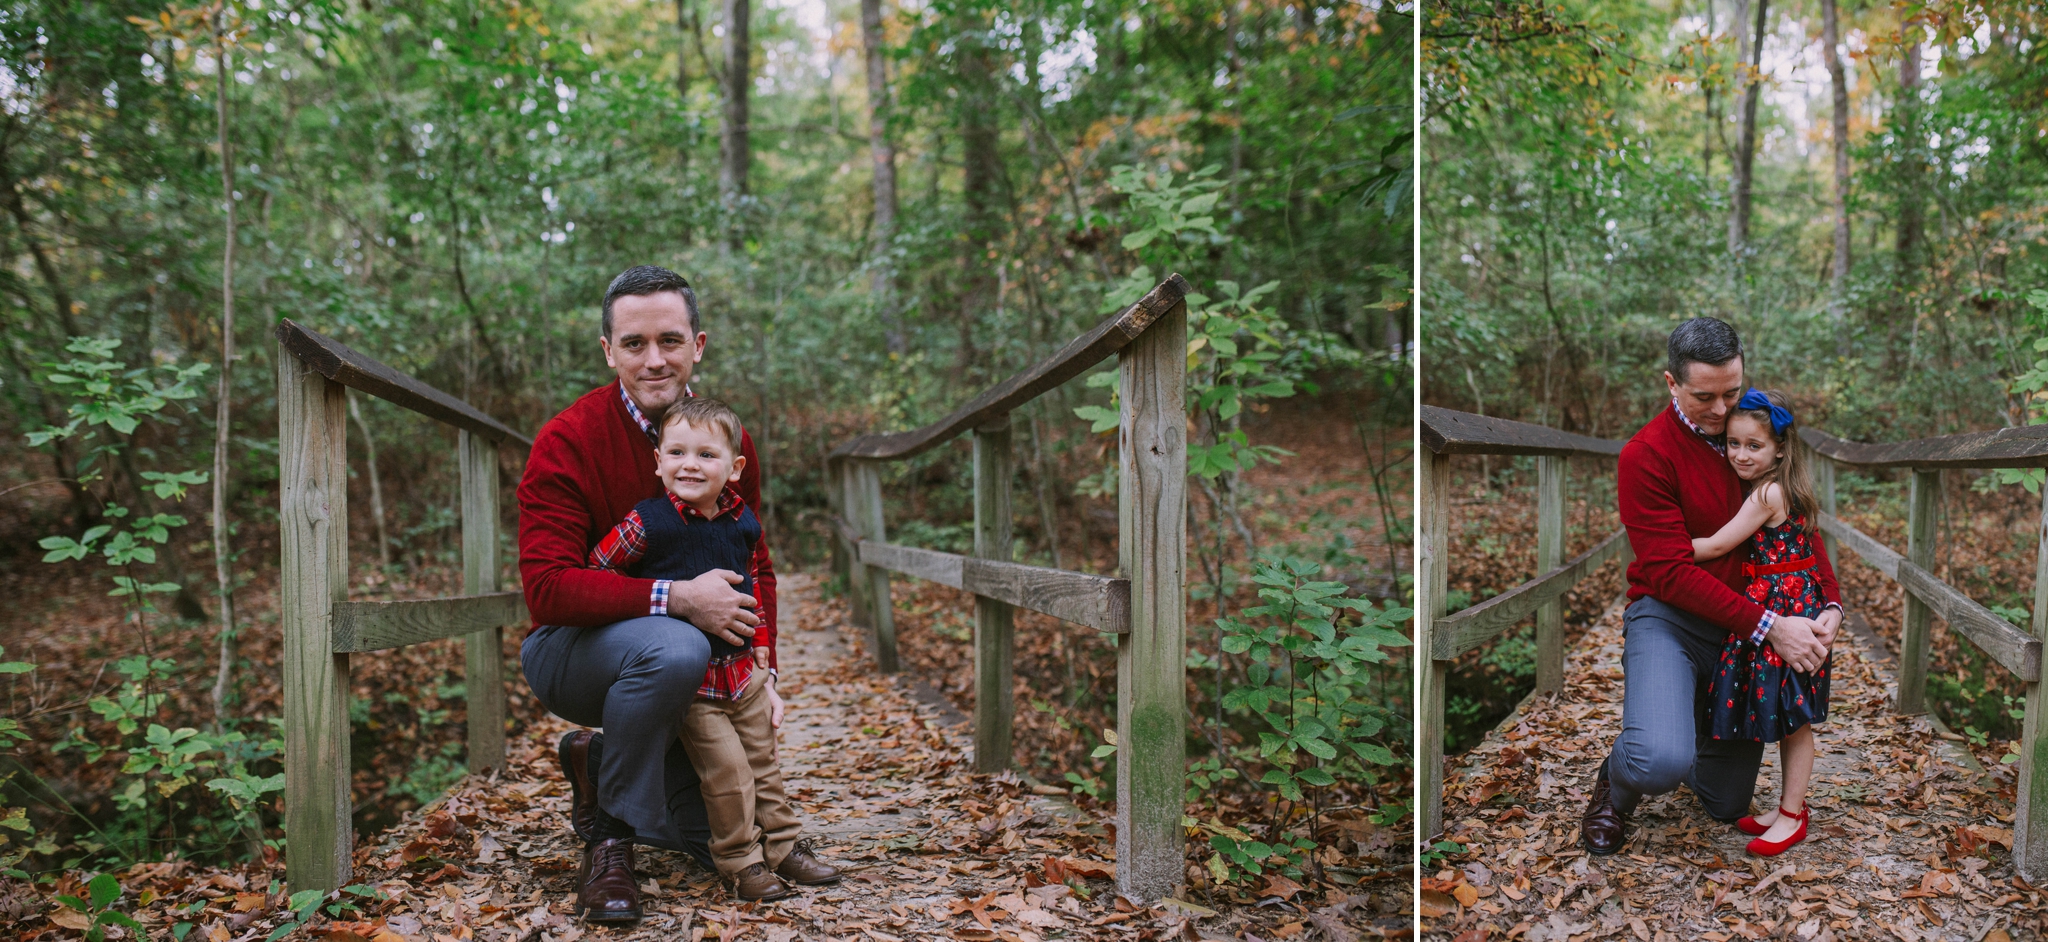 Ryan's - Family Photography at Clark Park in Fayetteville, North Carolina 6.jpg